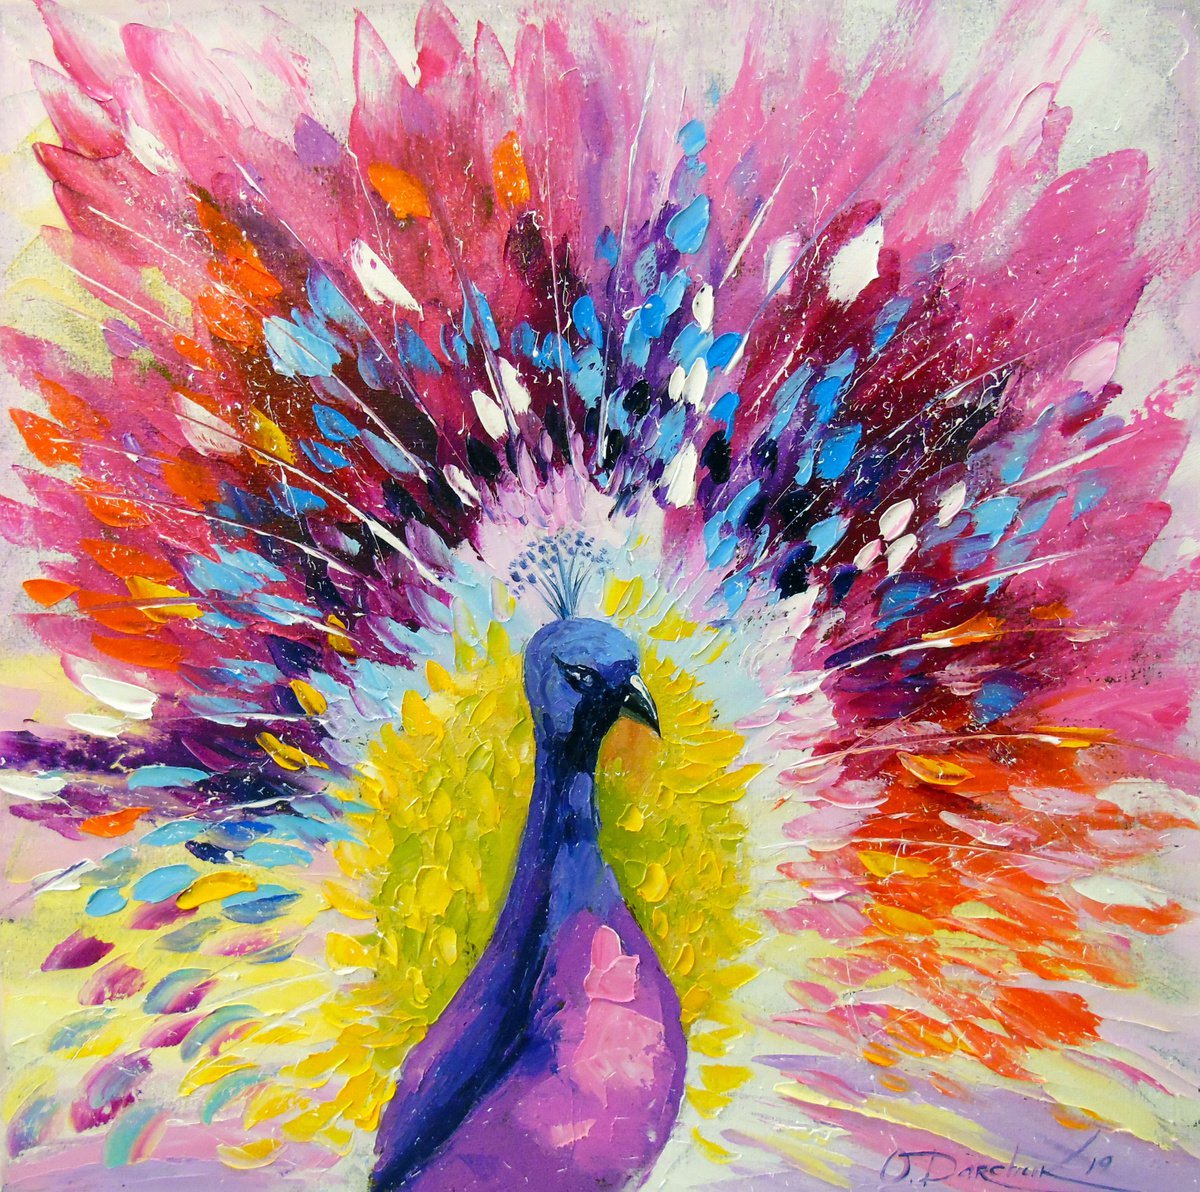 Peacock by Olha Darchuk